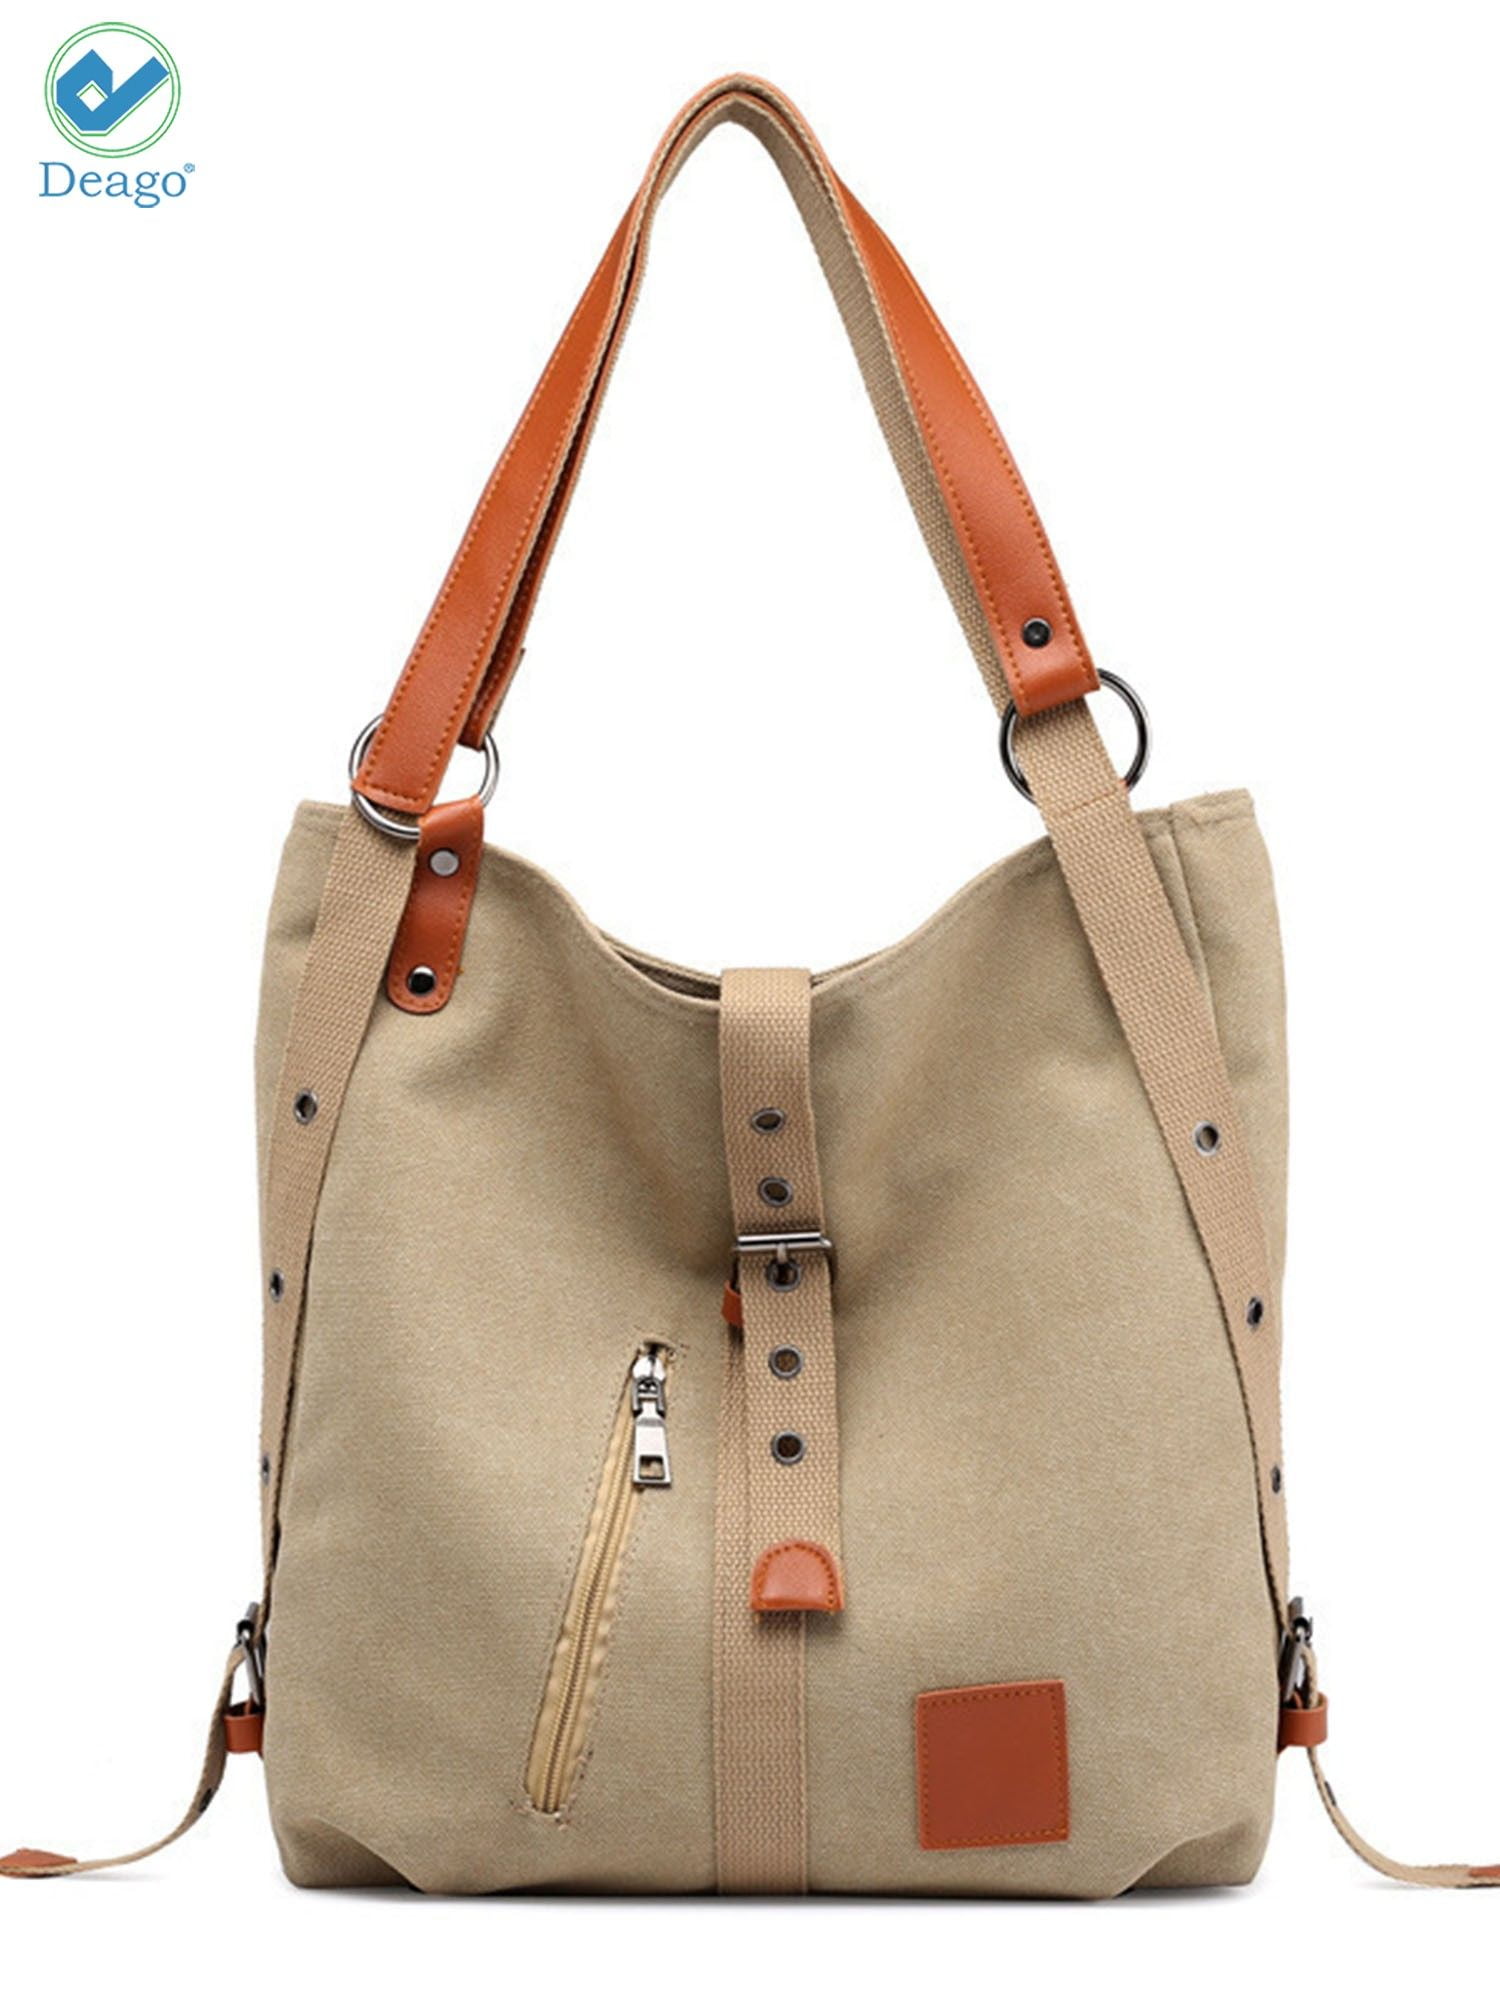 Deago Purse Handbag for Women Canvas Tote Bag Casual Shoulder Bag ...